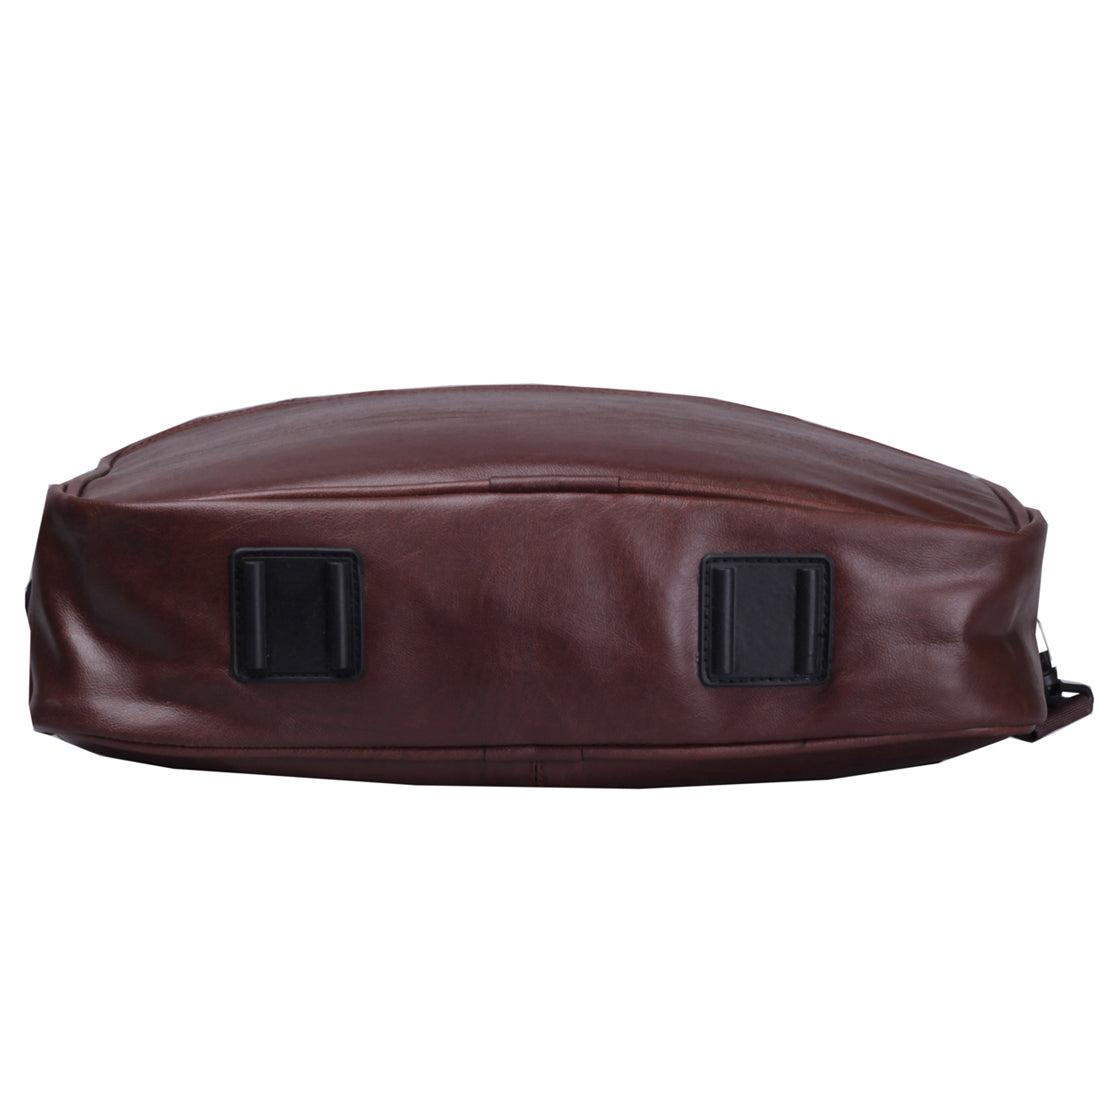 Aristo 11.5L Brown Office Bag